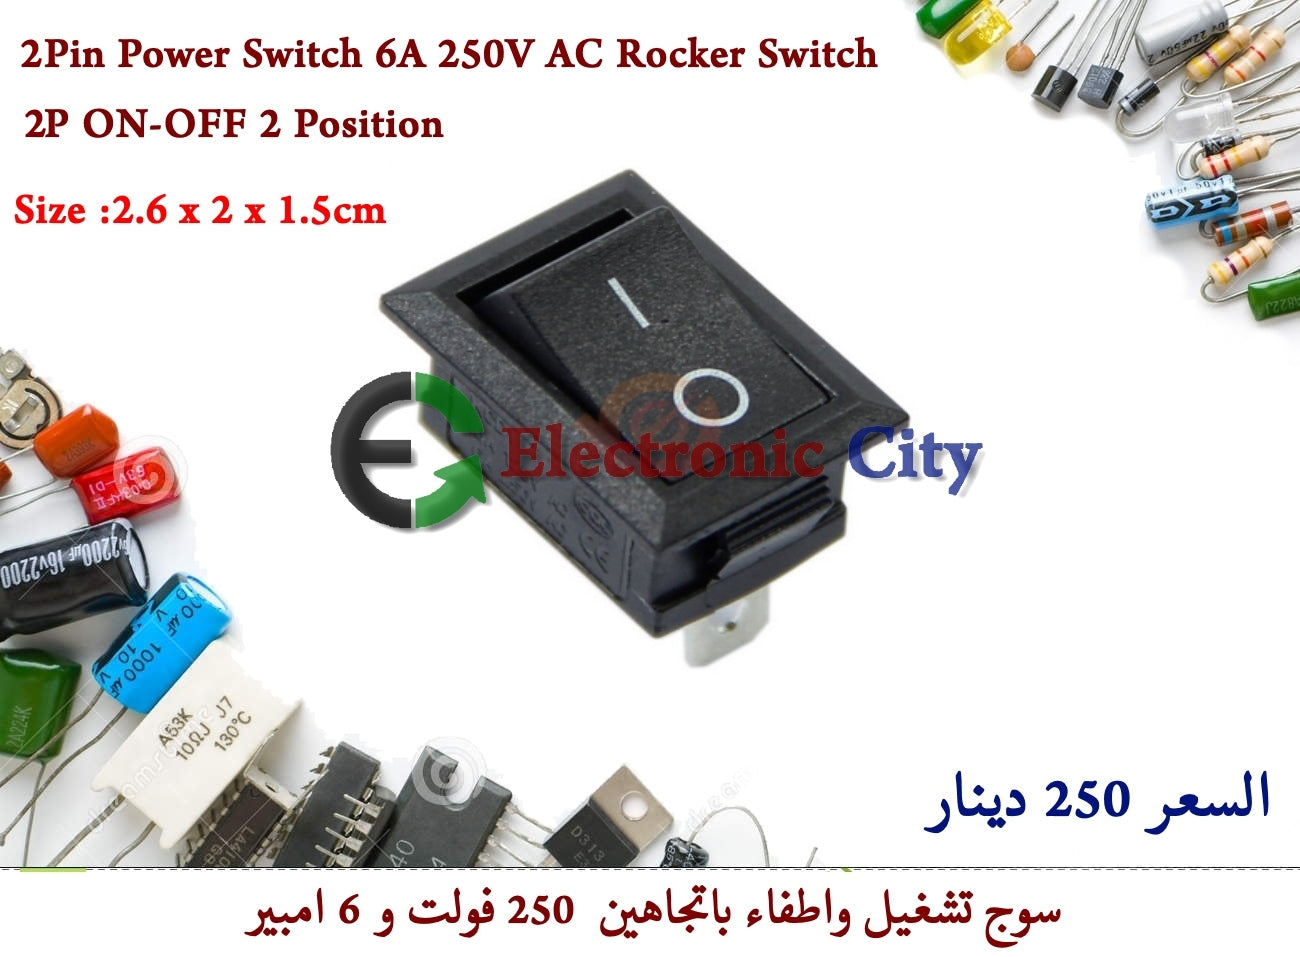 2Pin Power Switch 6A 250V AC Rocker Switch 2P ON-OFF 2 Position Size 2.6 x 2 x 1.5cm  0504976